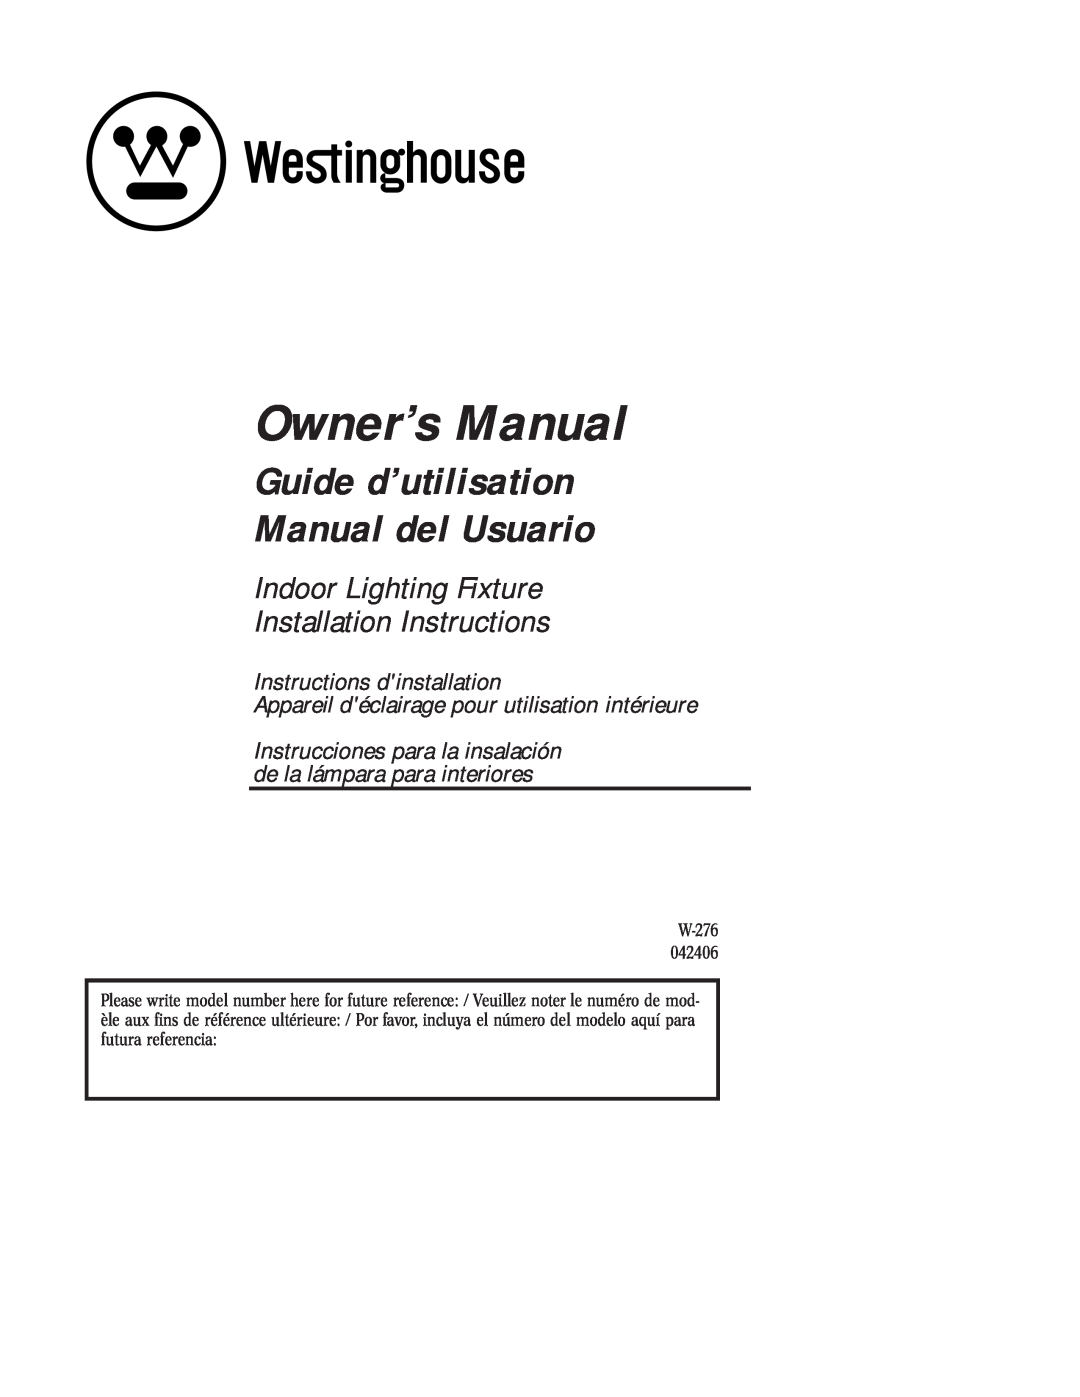 Westinghouse W-276 owner manual Guide d’utilisation Manual del Usuario, Indoor Lighting Fixture Installation Instructions 